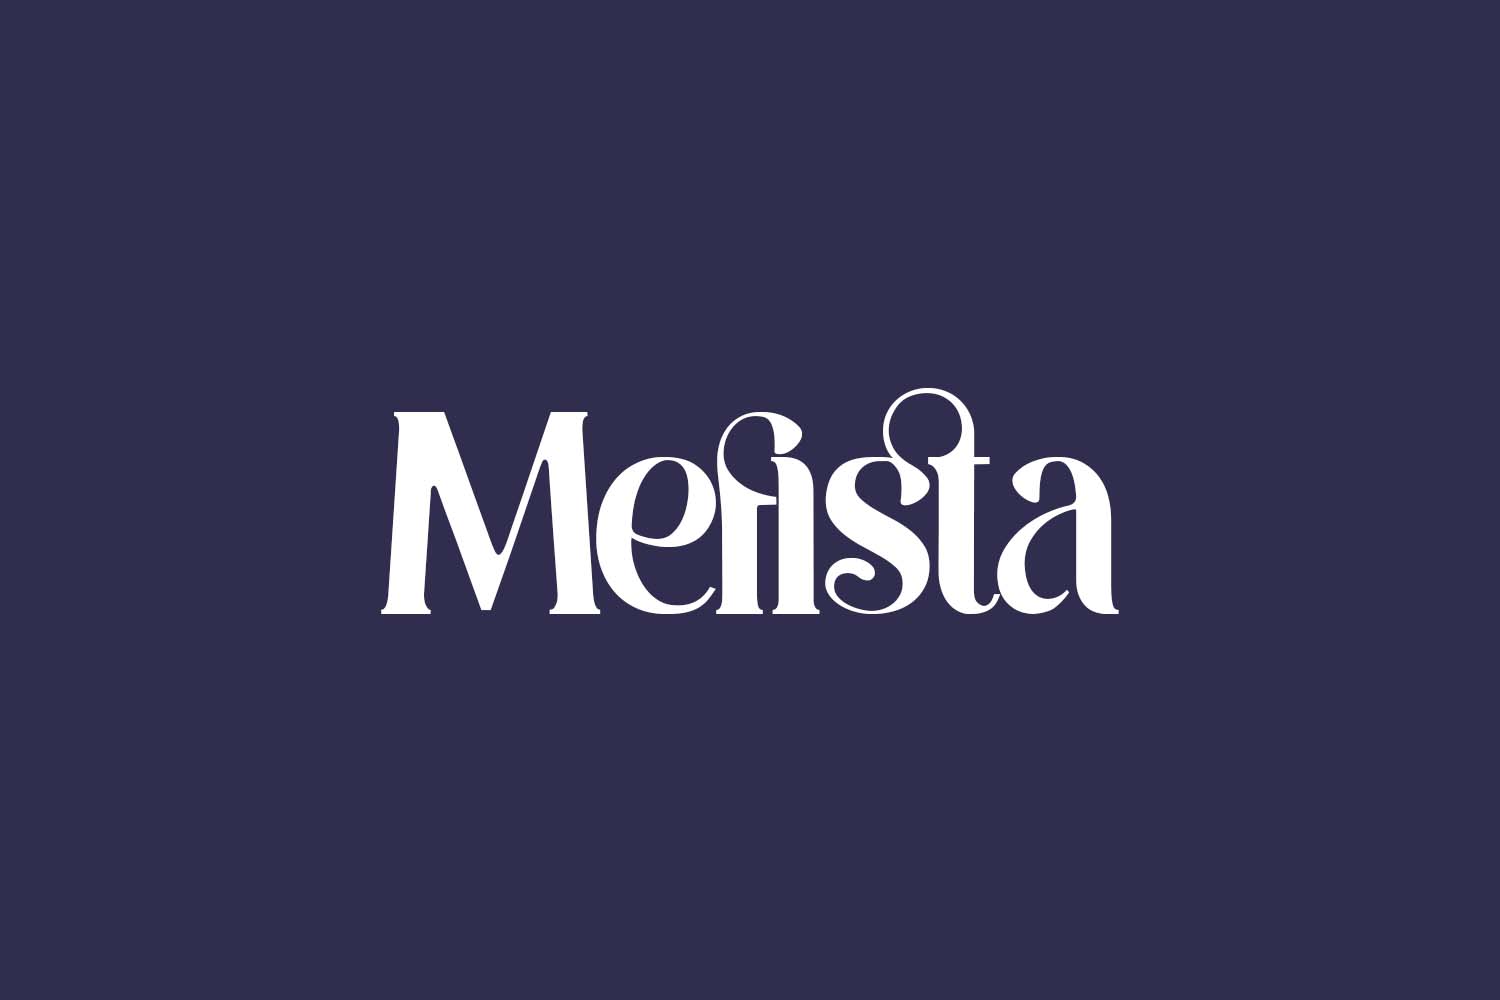 Mefista Free Font